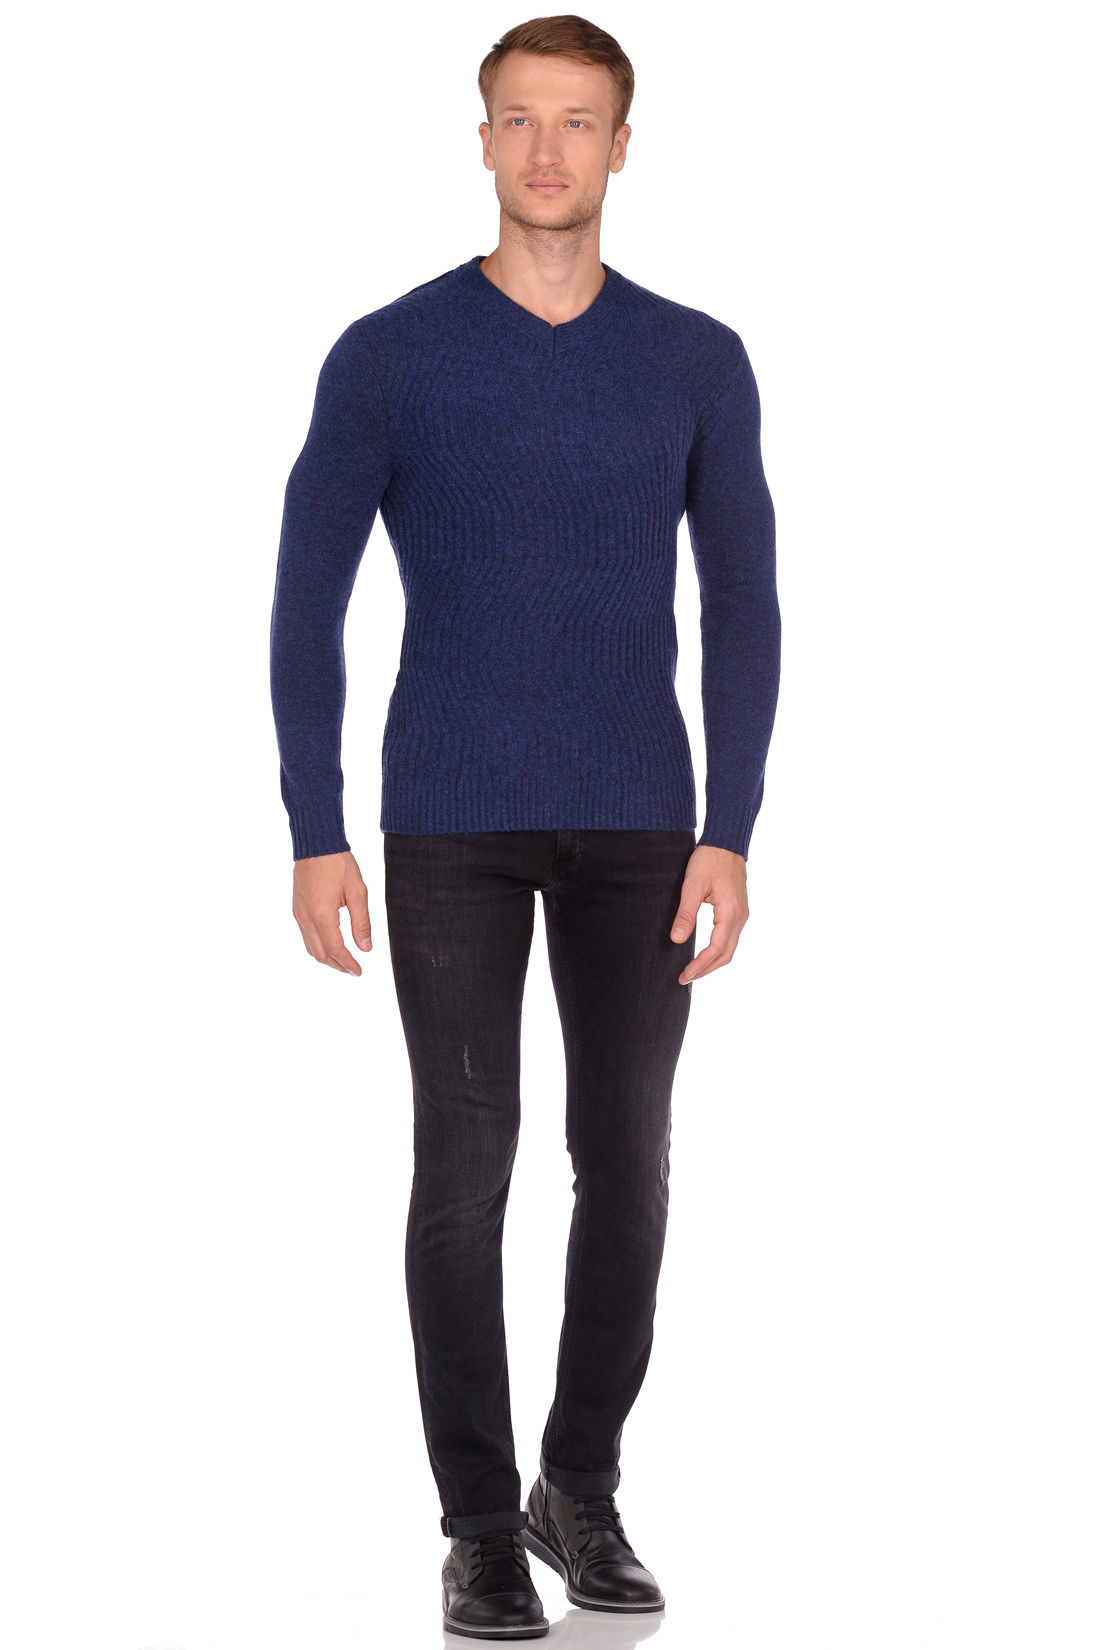 Пуловер с волнистым рисунком (арт. baon B638570), размер XXL, цвет baltic blue melange#синий Пуловер с волнистым рисунком (арт. baon B638570) - фото 3